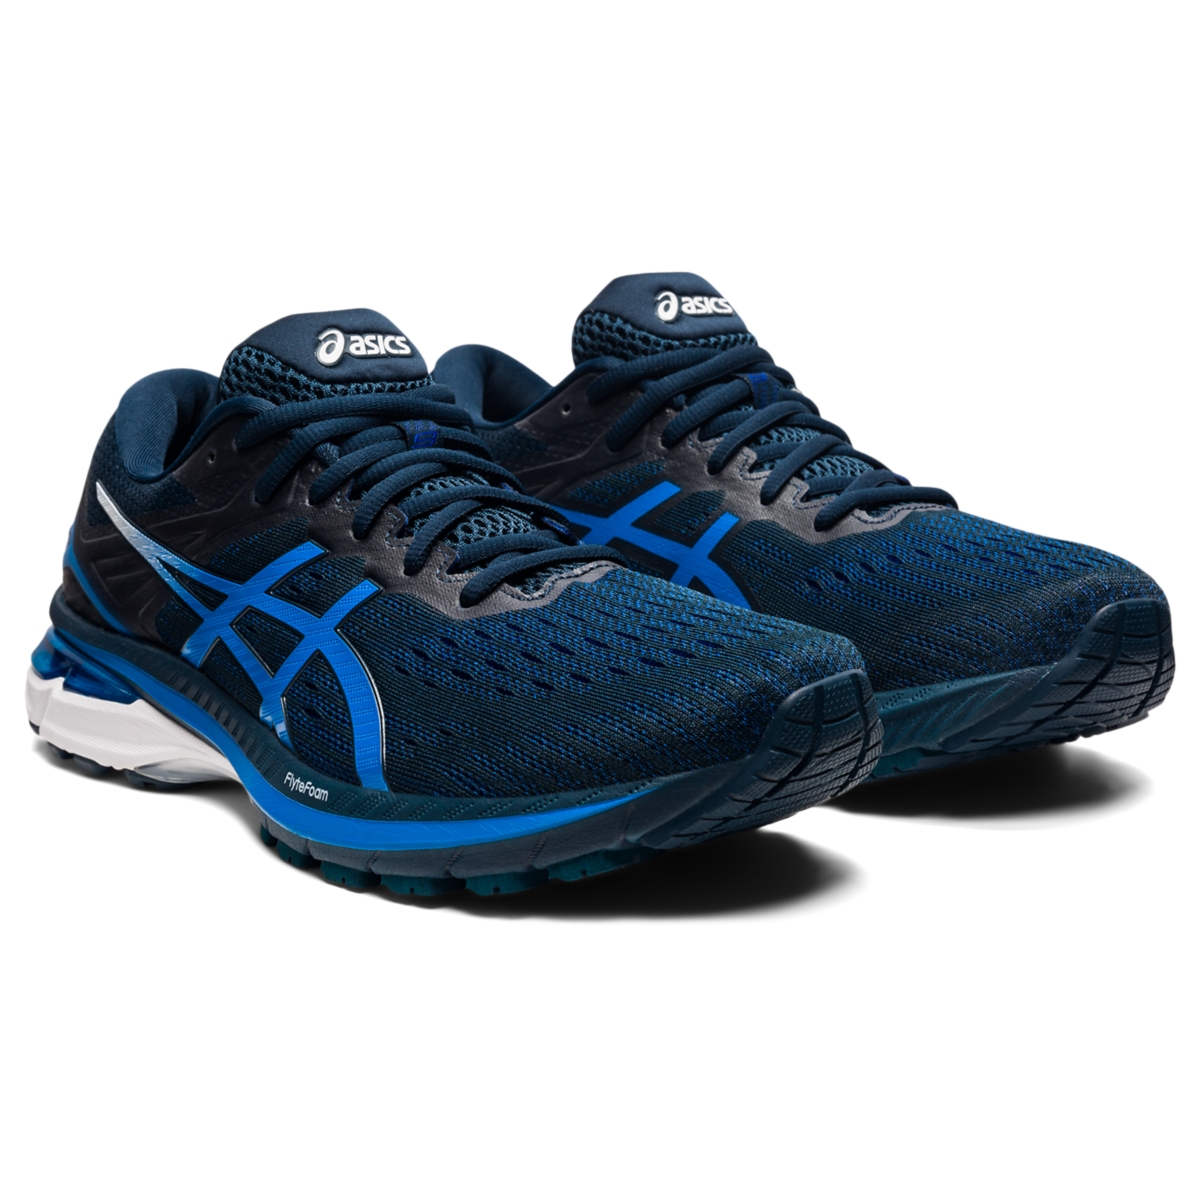 ASICS Men's GT-2000 9 Running Shoes 1011A983 | eBay